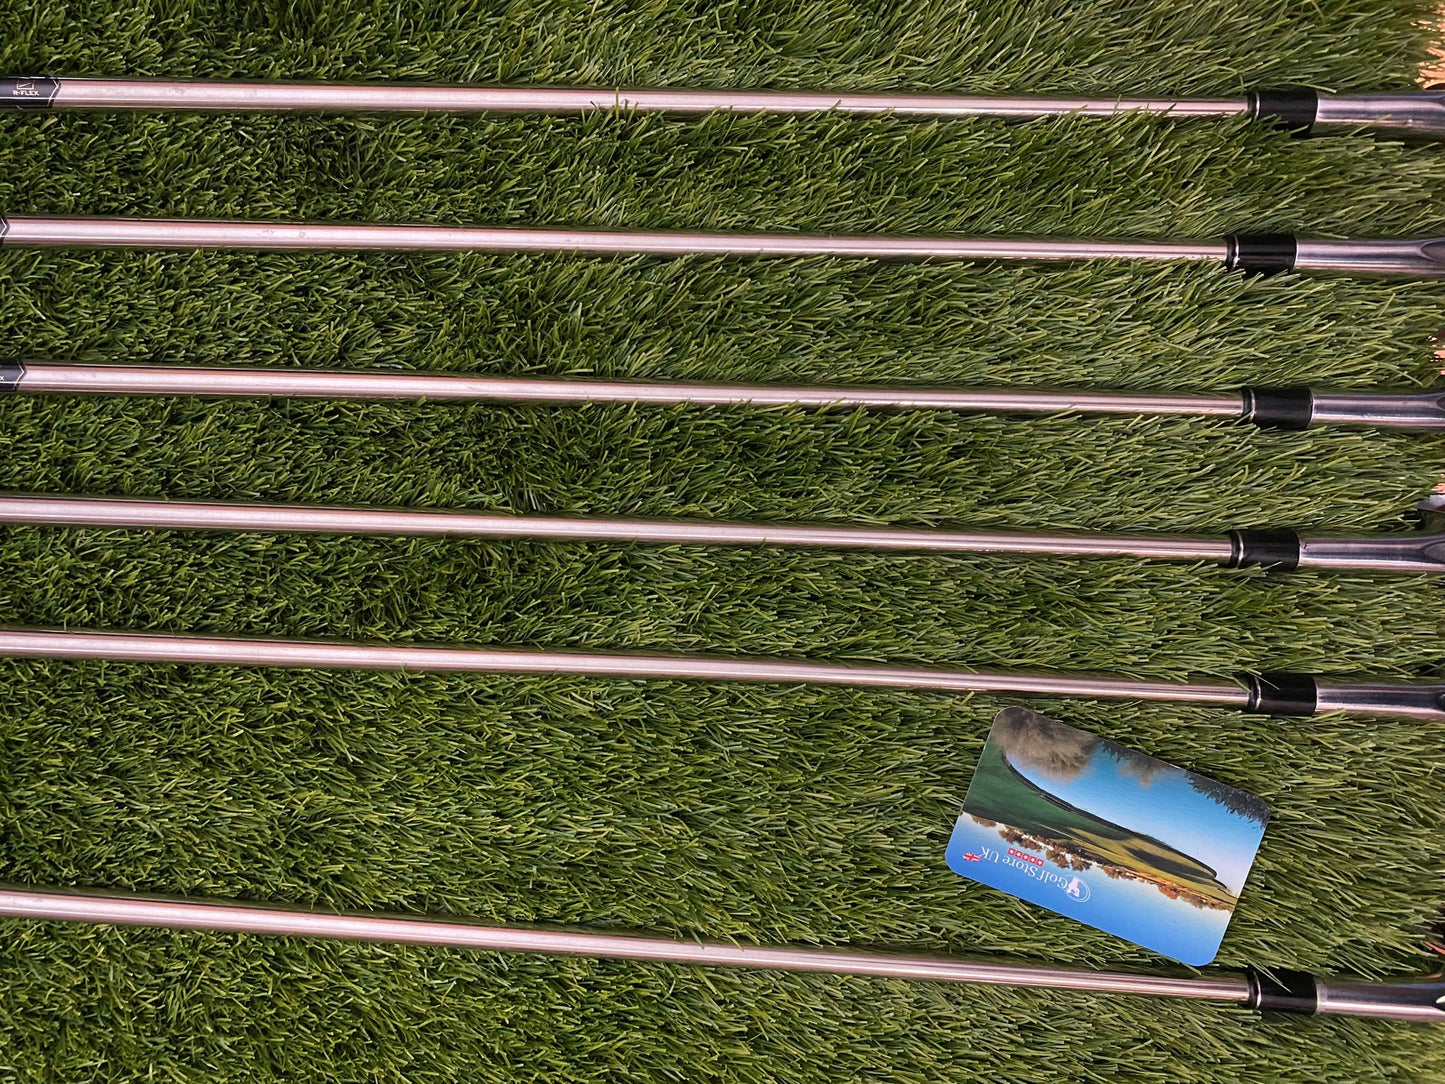 TaylorMade RSI 2 Forged Iron Set 5-PW Stunning Set Half Inch Shorter - Golf Store UK